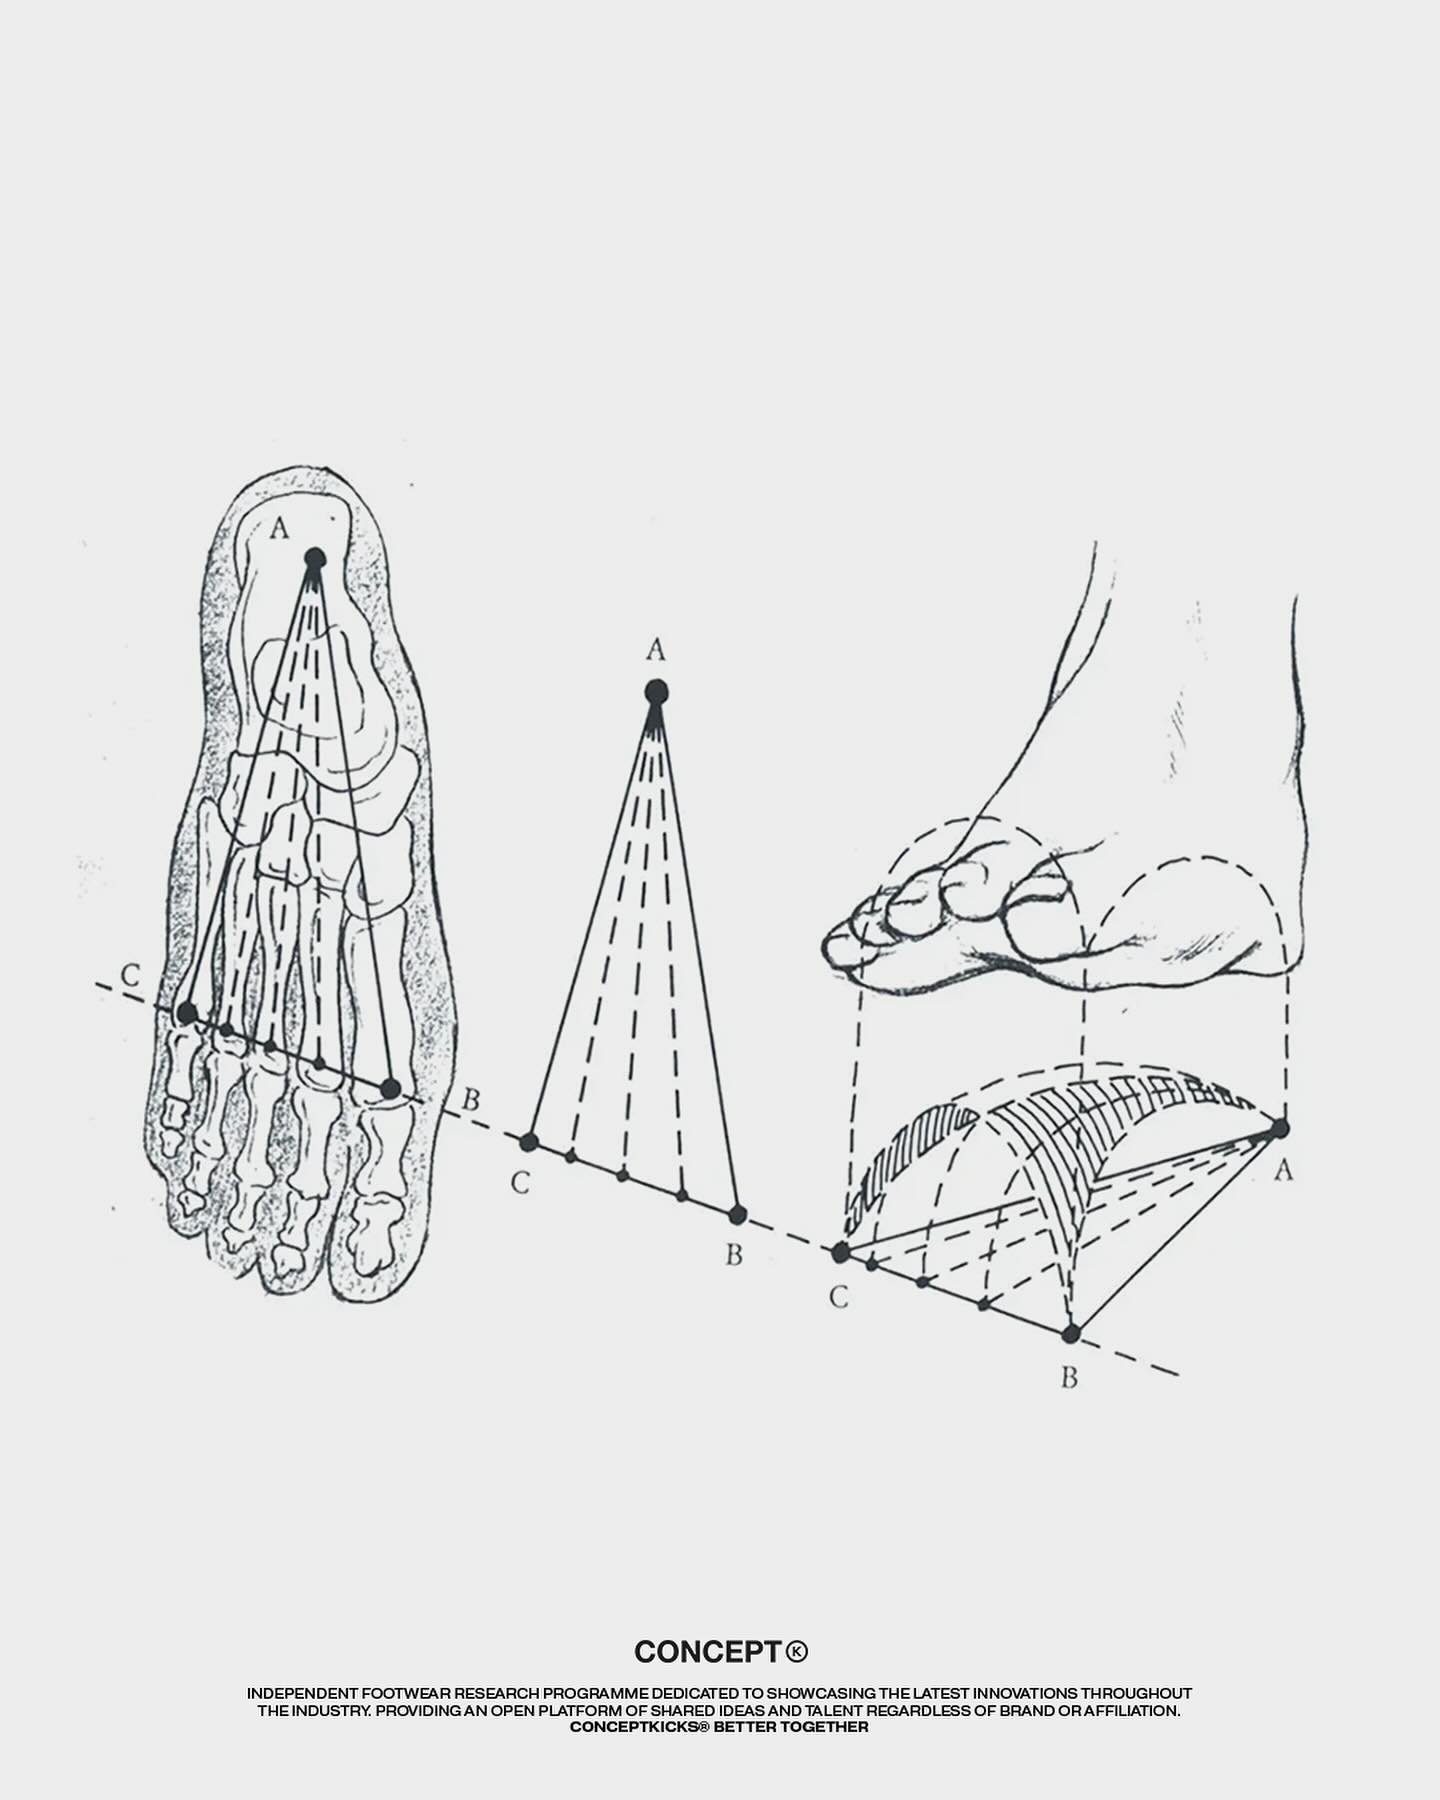 🖐️ Original &ldquo;Tatto&rdquo; [Five Fingers] sketches by Robert Fliri 

@vibramfivefingers #conceptkicks